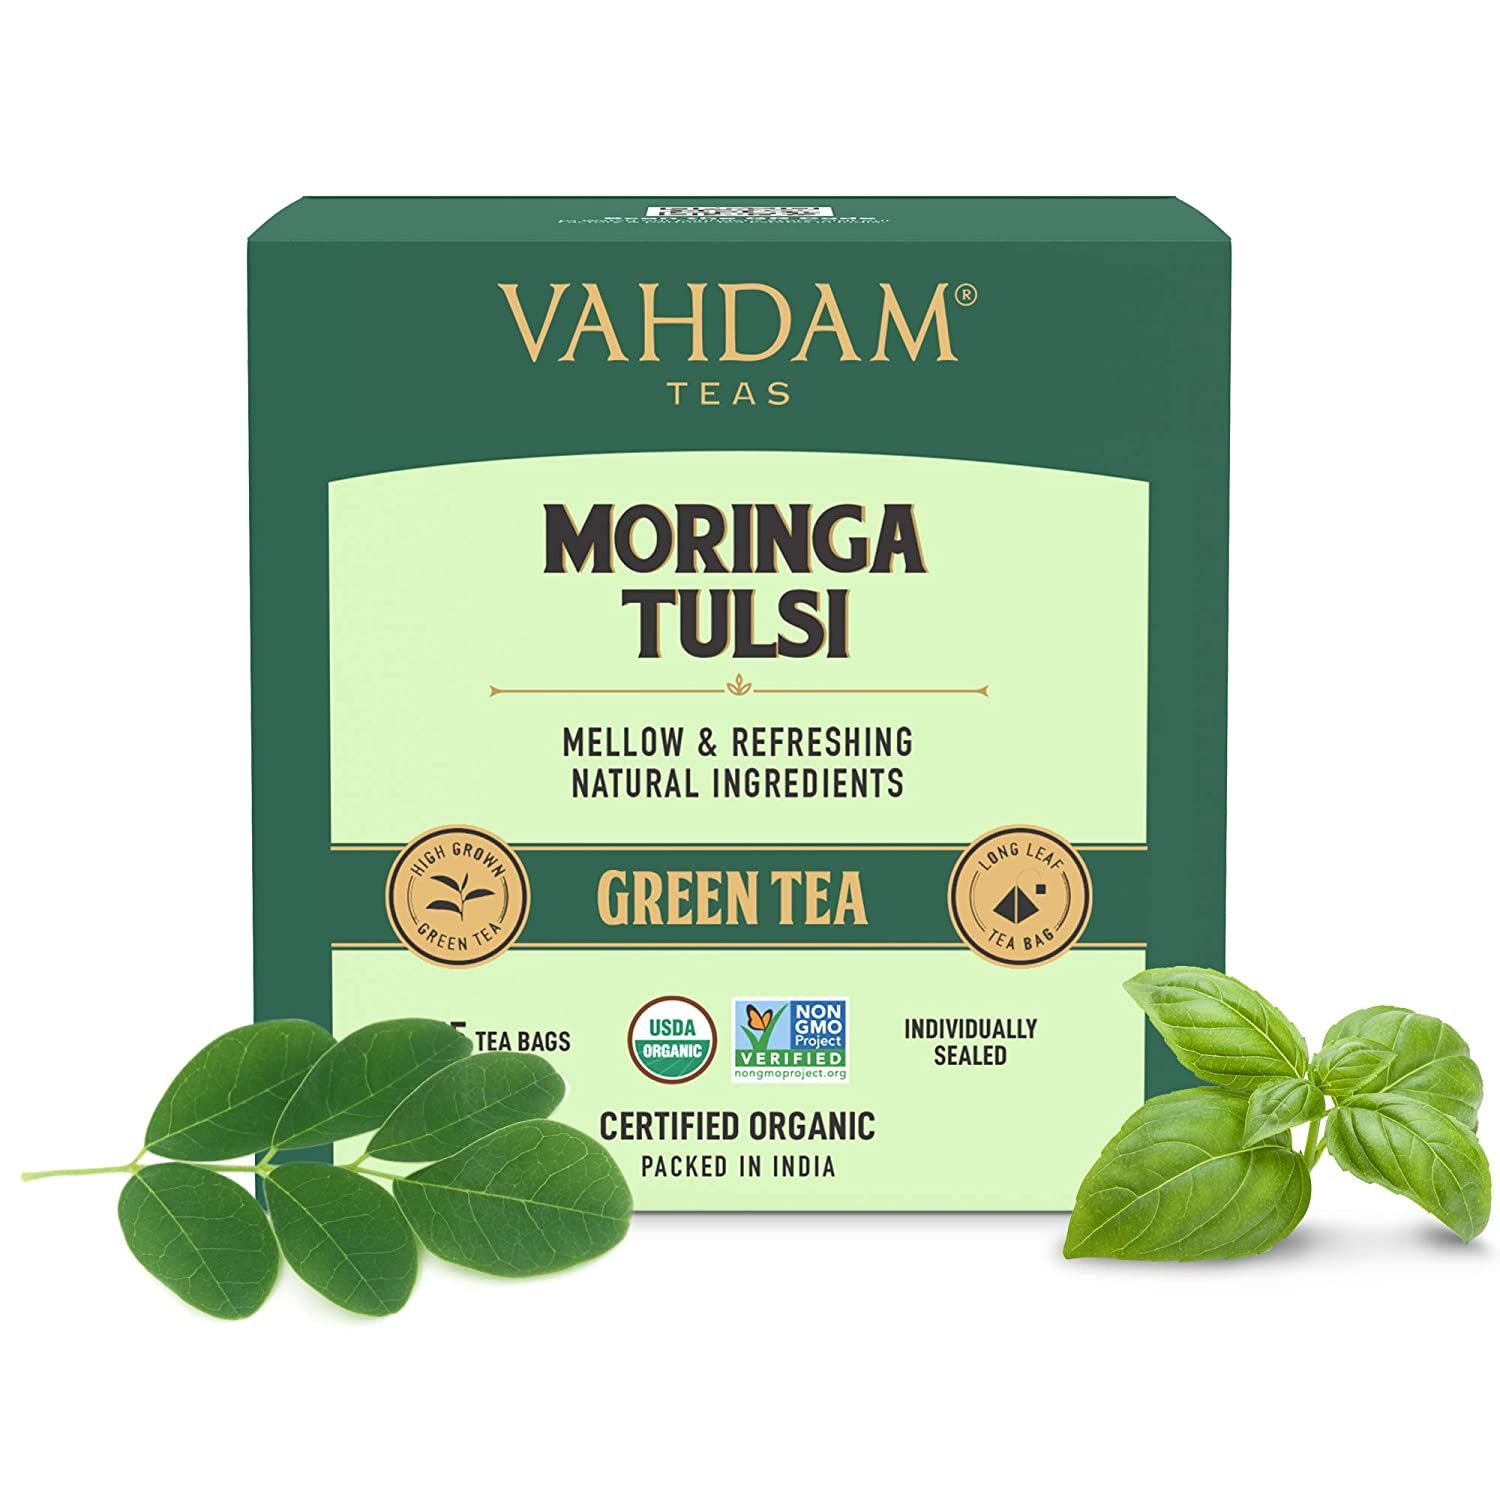 Vahdam Organic Moringa Tulsi Green Tea Image